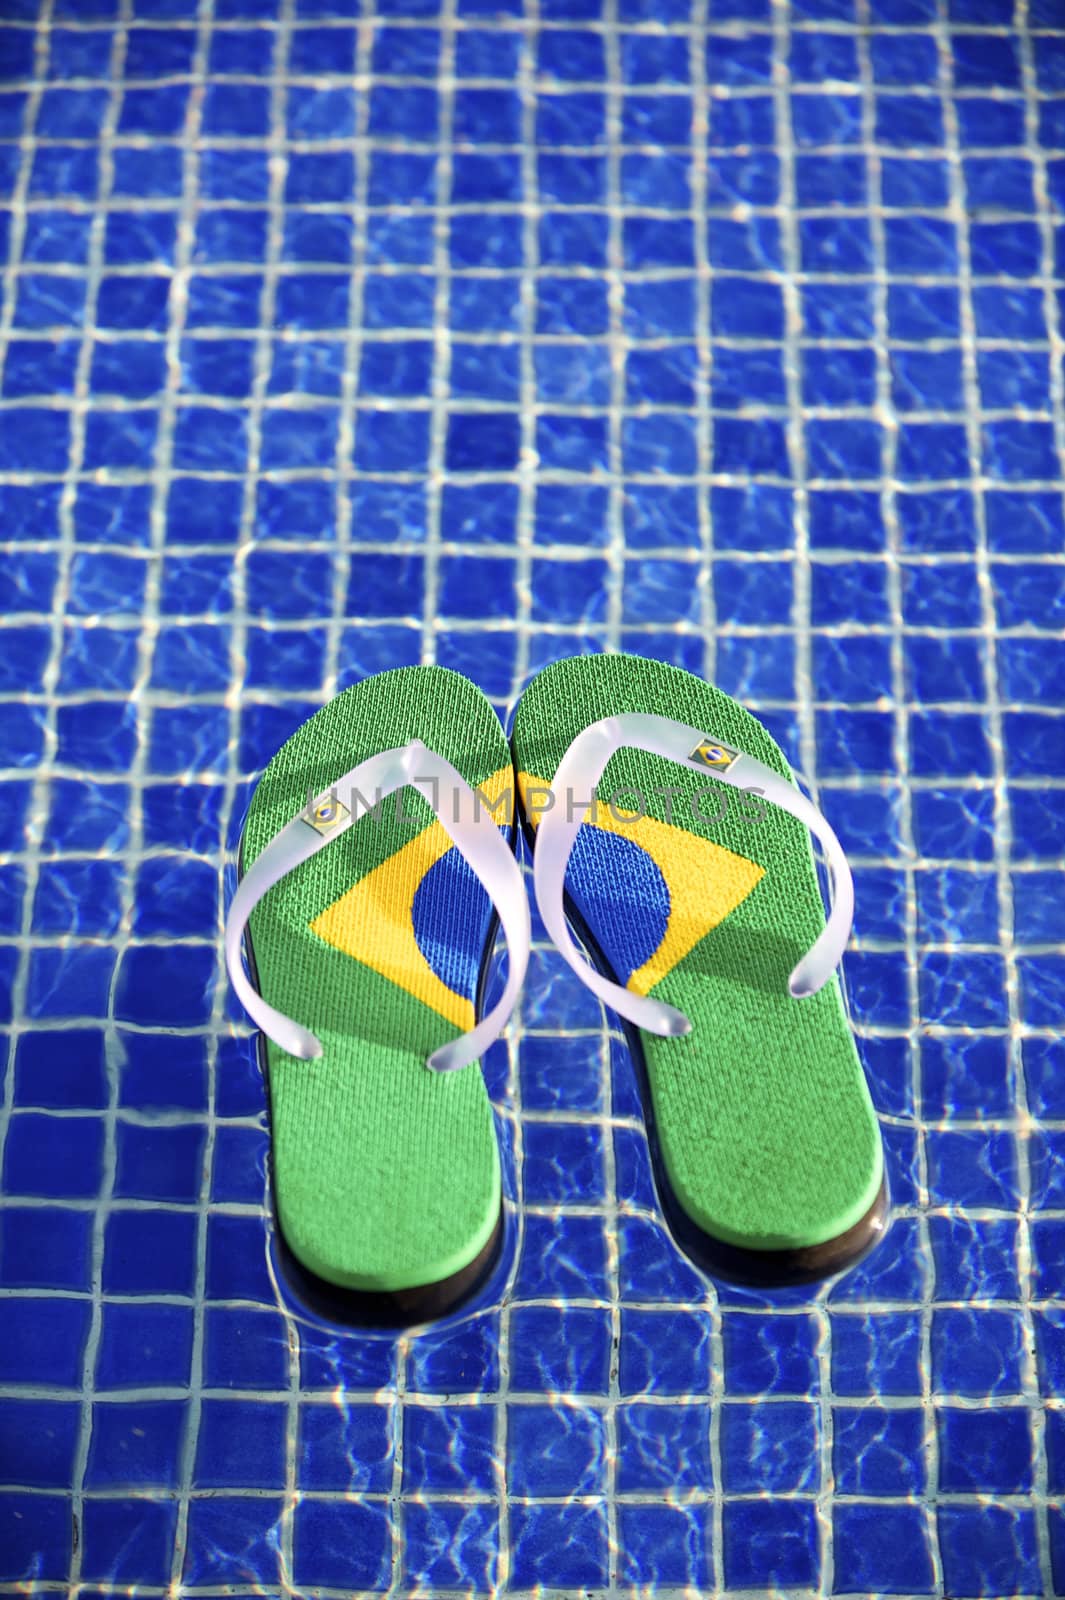 Brazilian flipflop by swimnews